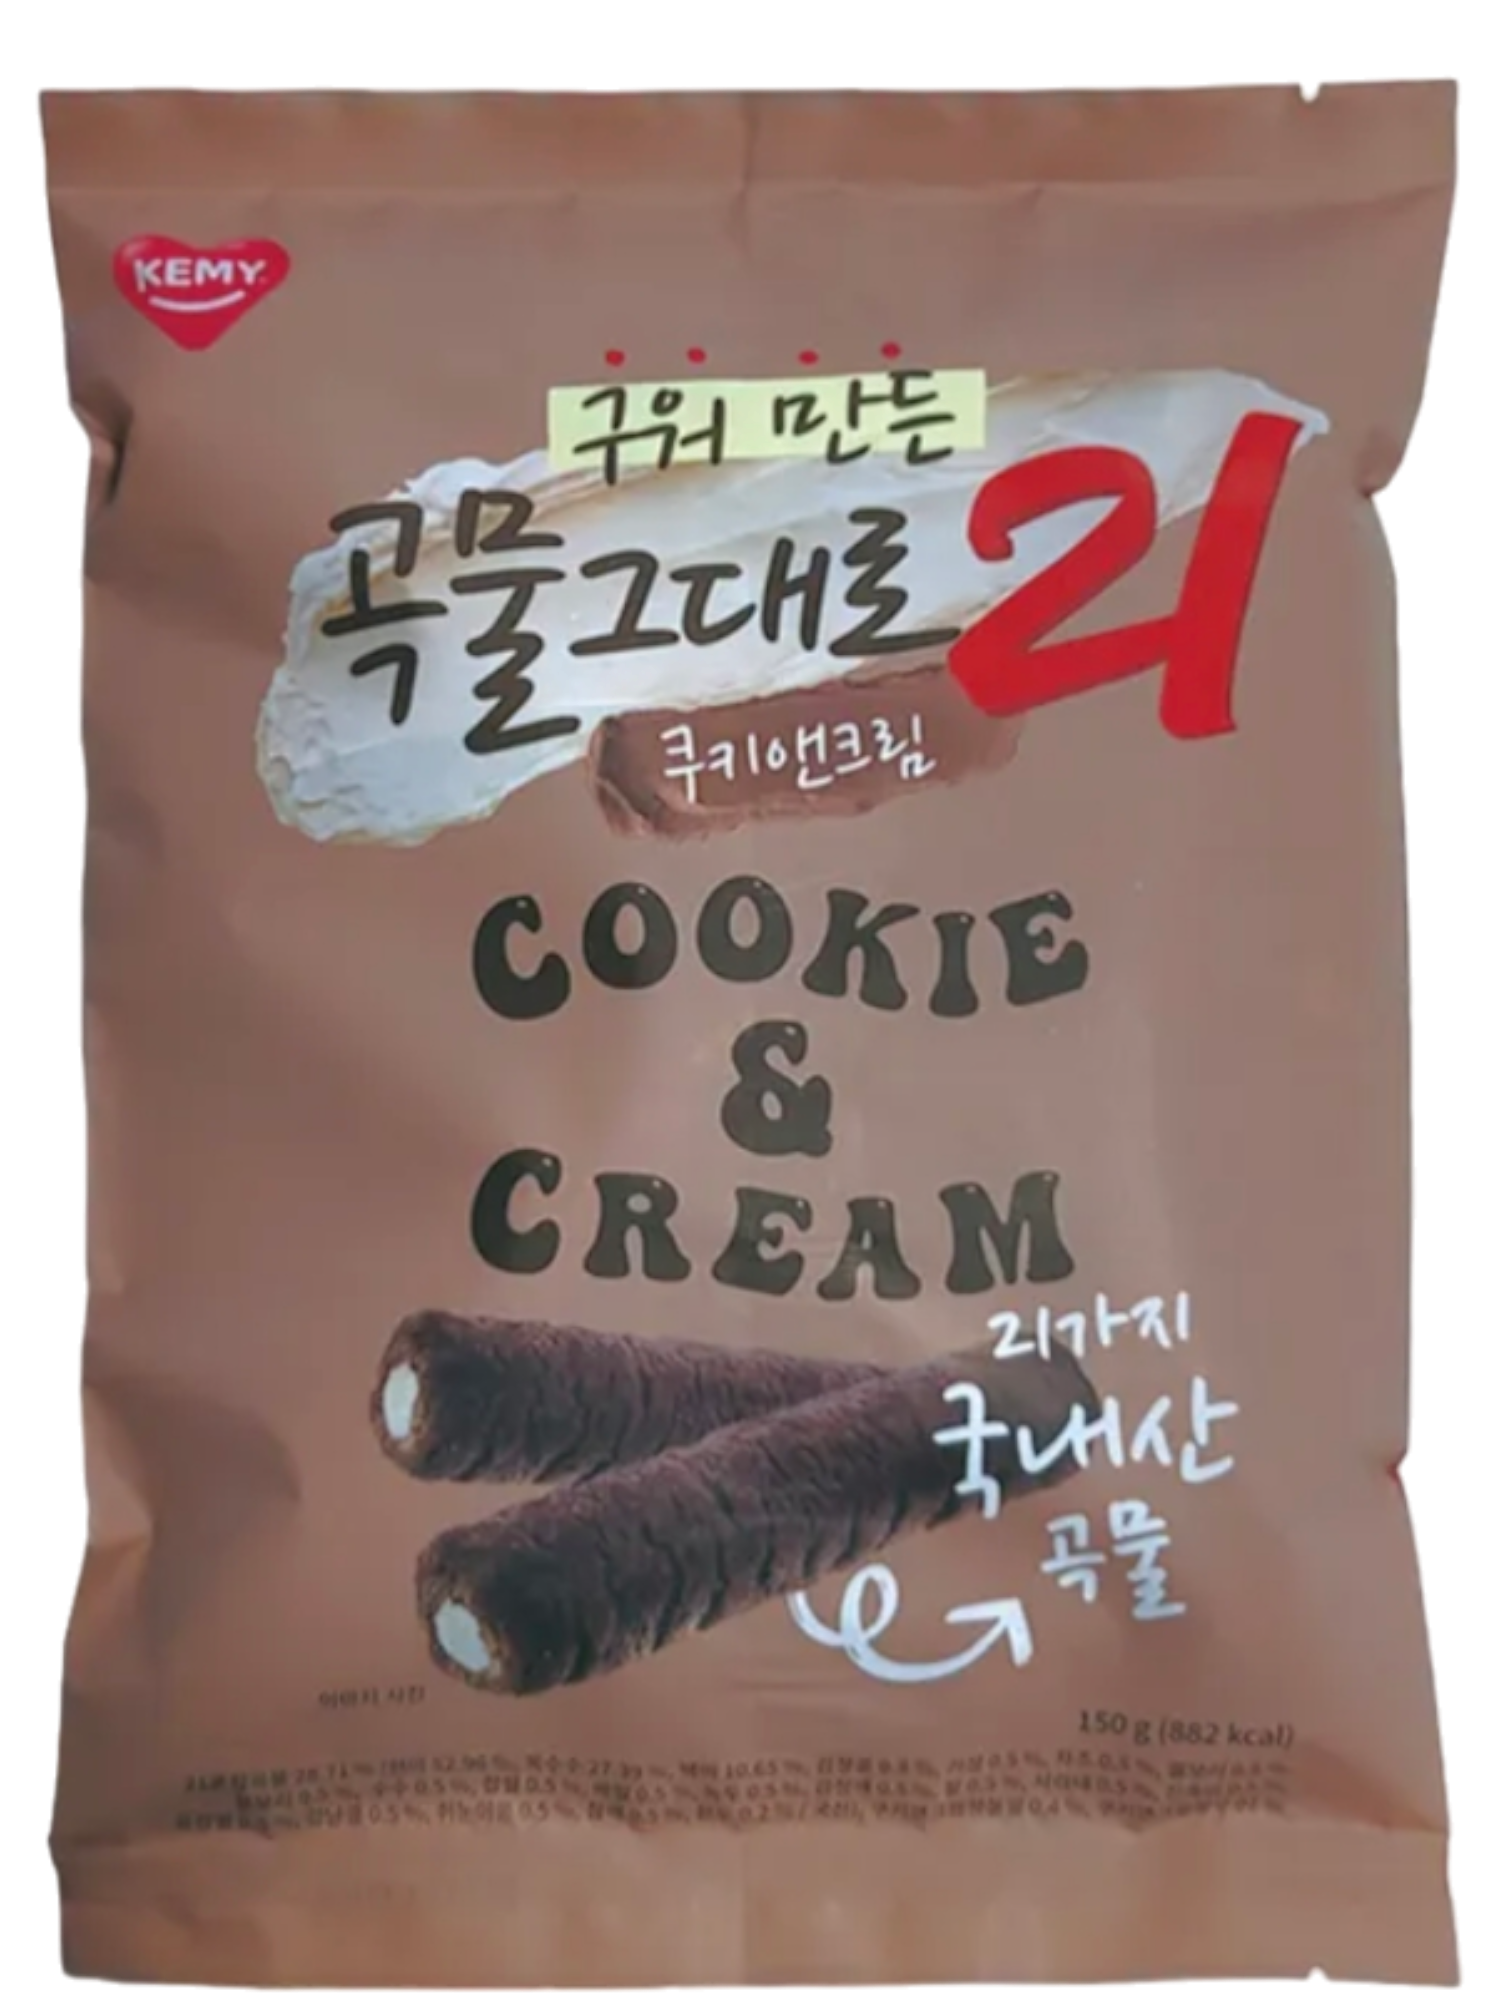 Kemy Crispy Roll 21 Cookie & Cream 150g